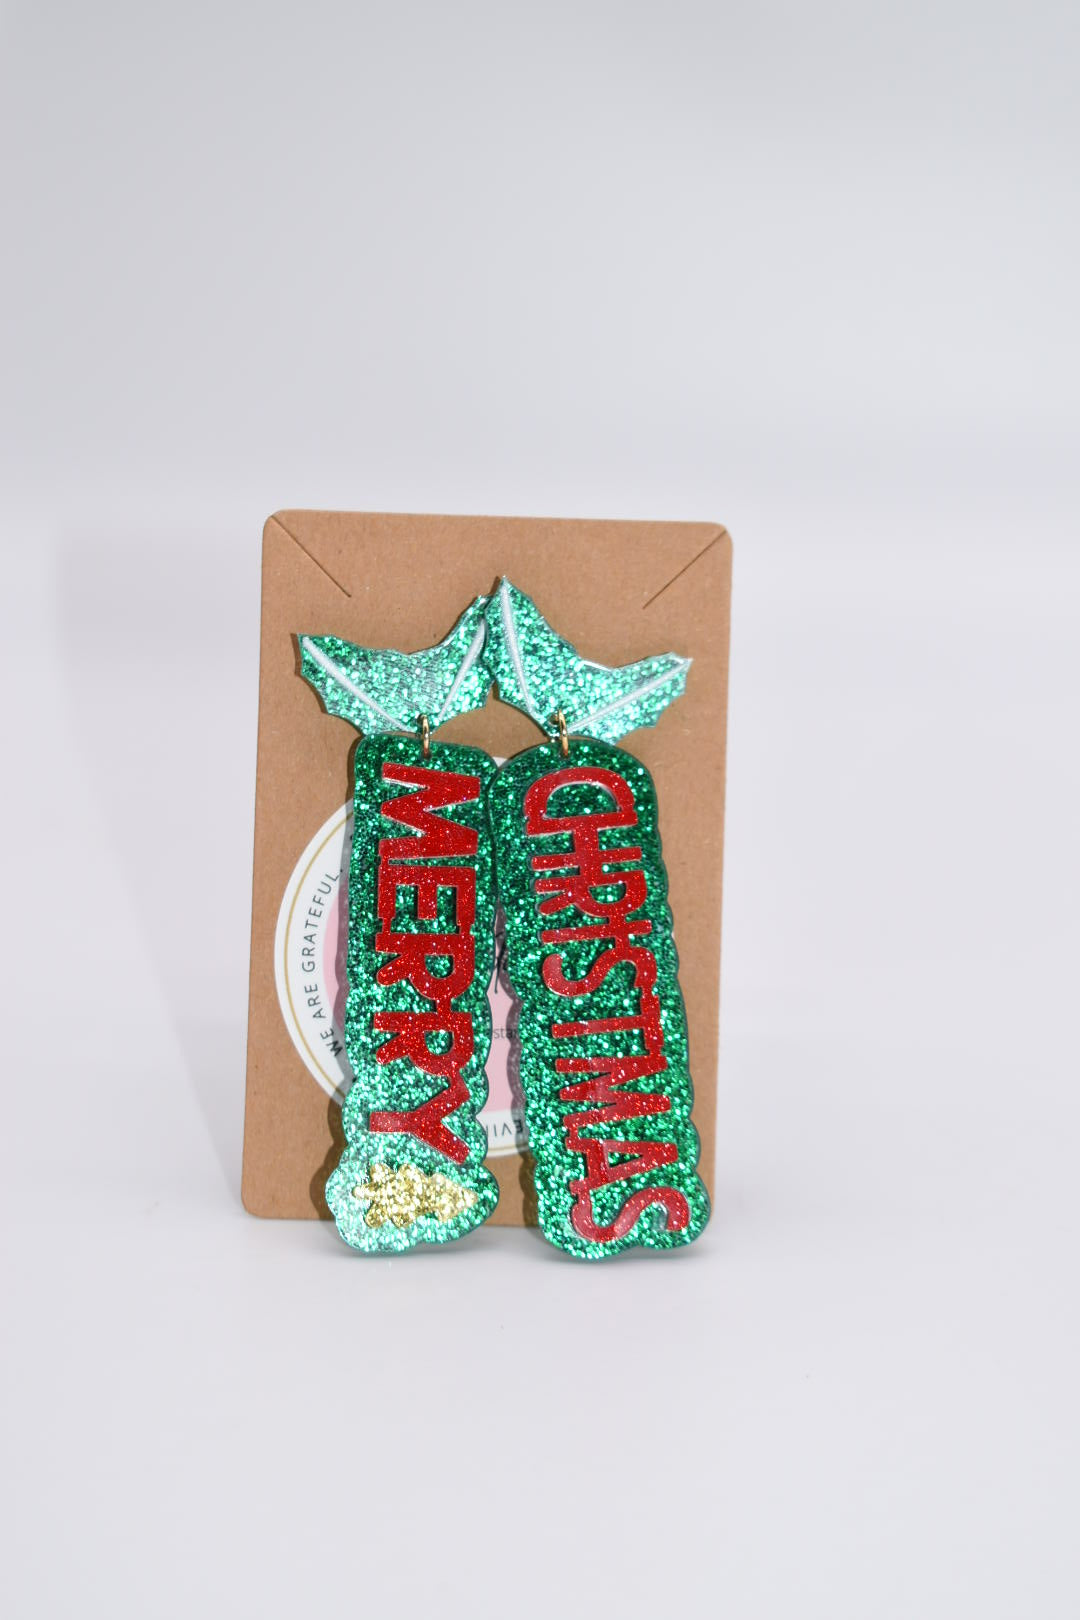 Seasonal Earrings: "Merry Mistletoe Christmas" Earrings